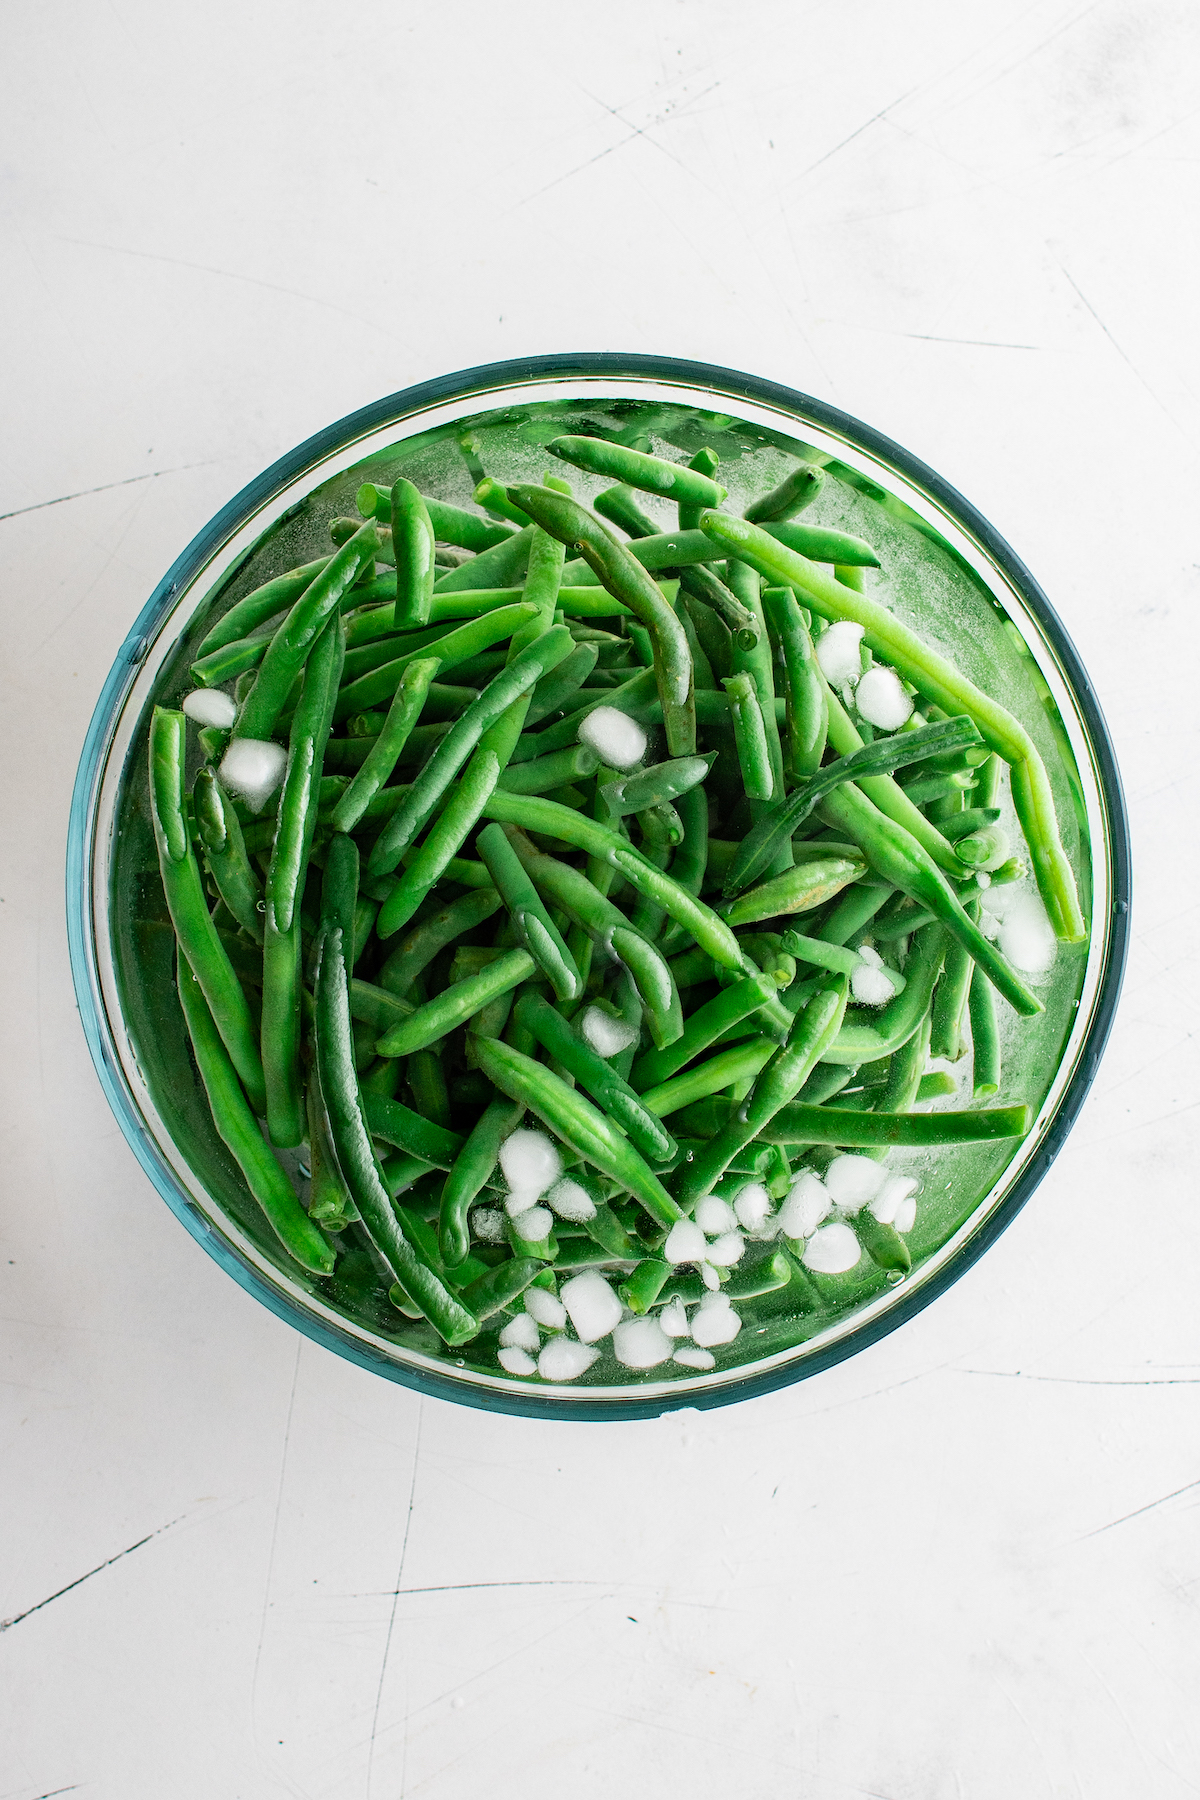 Green beans in an ice bath.